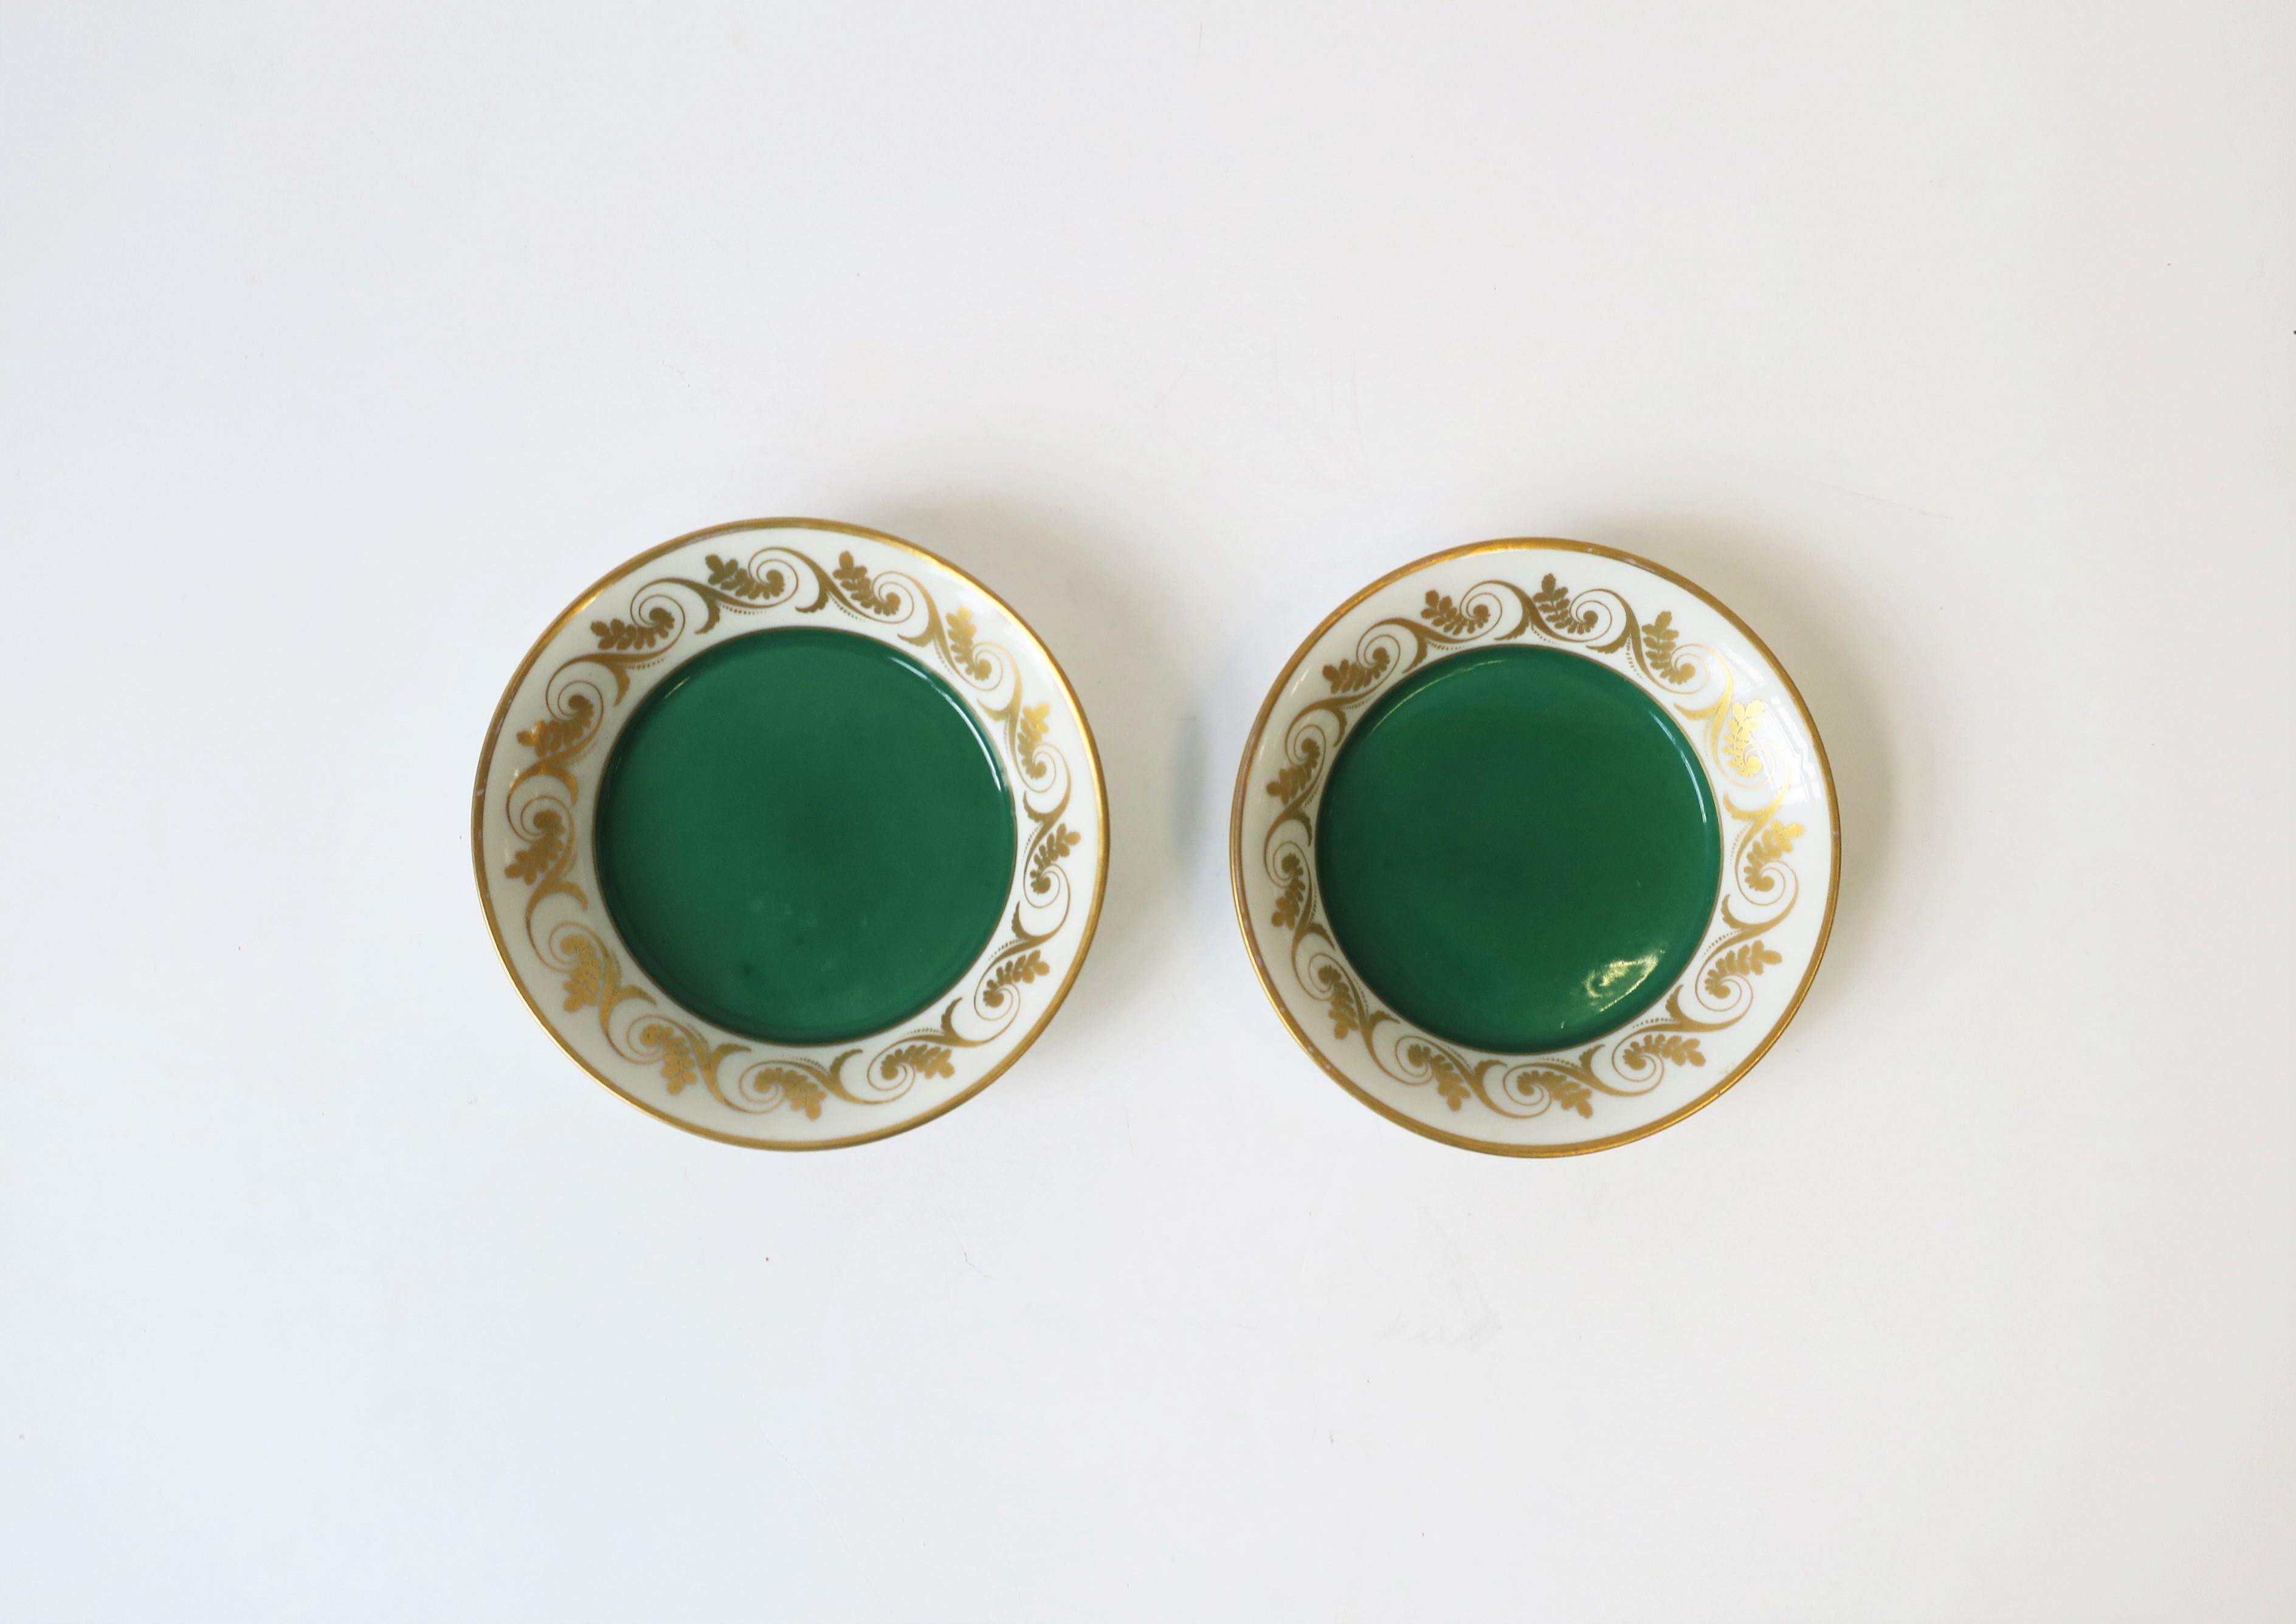 Richard Ginori Italian Porcelain Jewelry Dish in Gold and Green For Sale 4